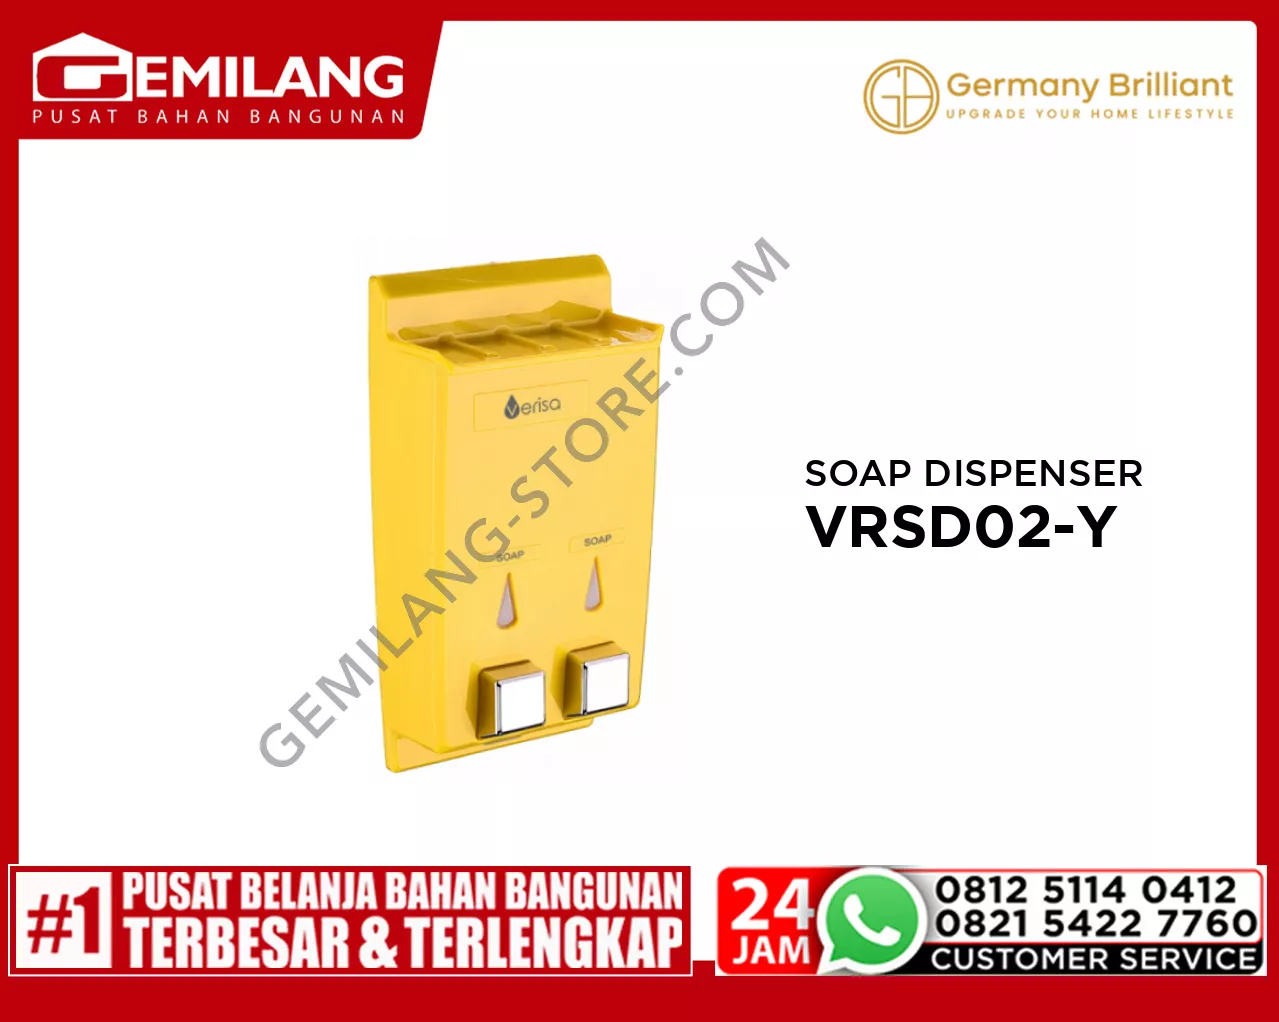 GERMANY BRILLIANT SOAP DISPENSER VRSD02-Y YELLOW